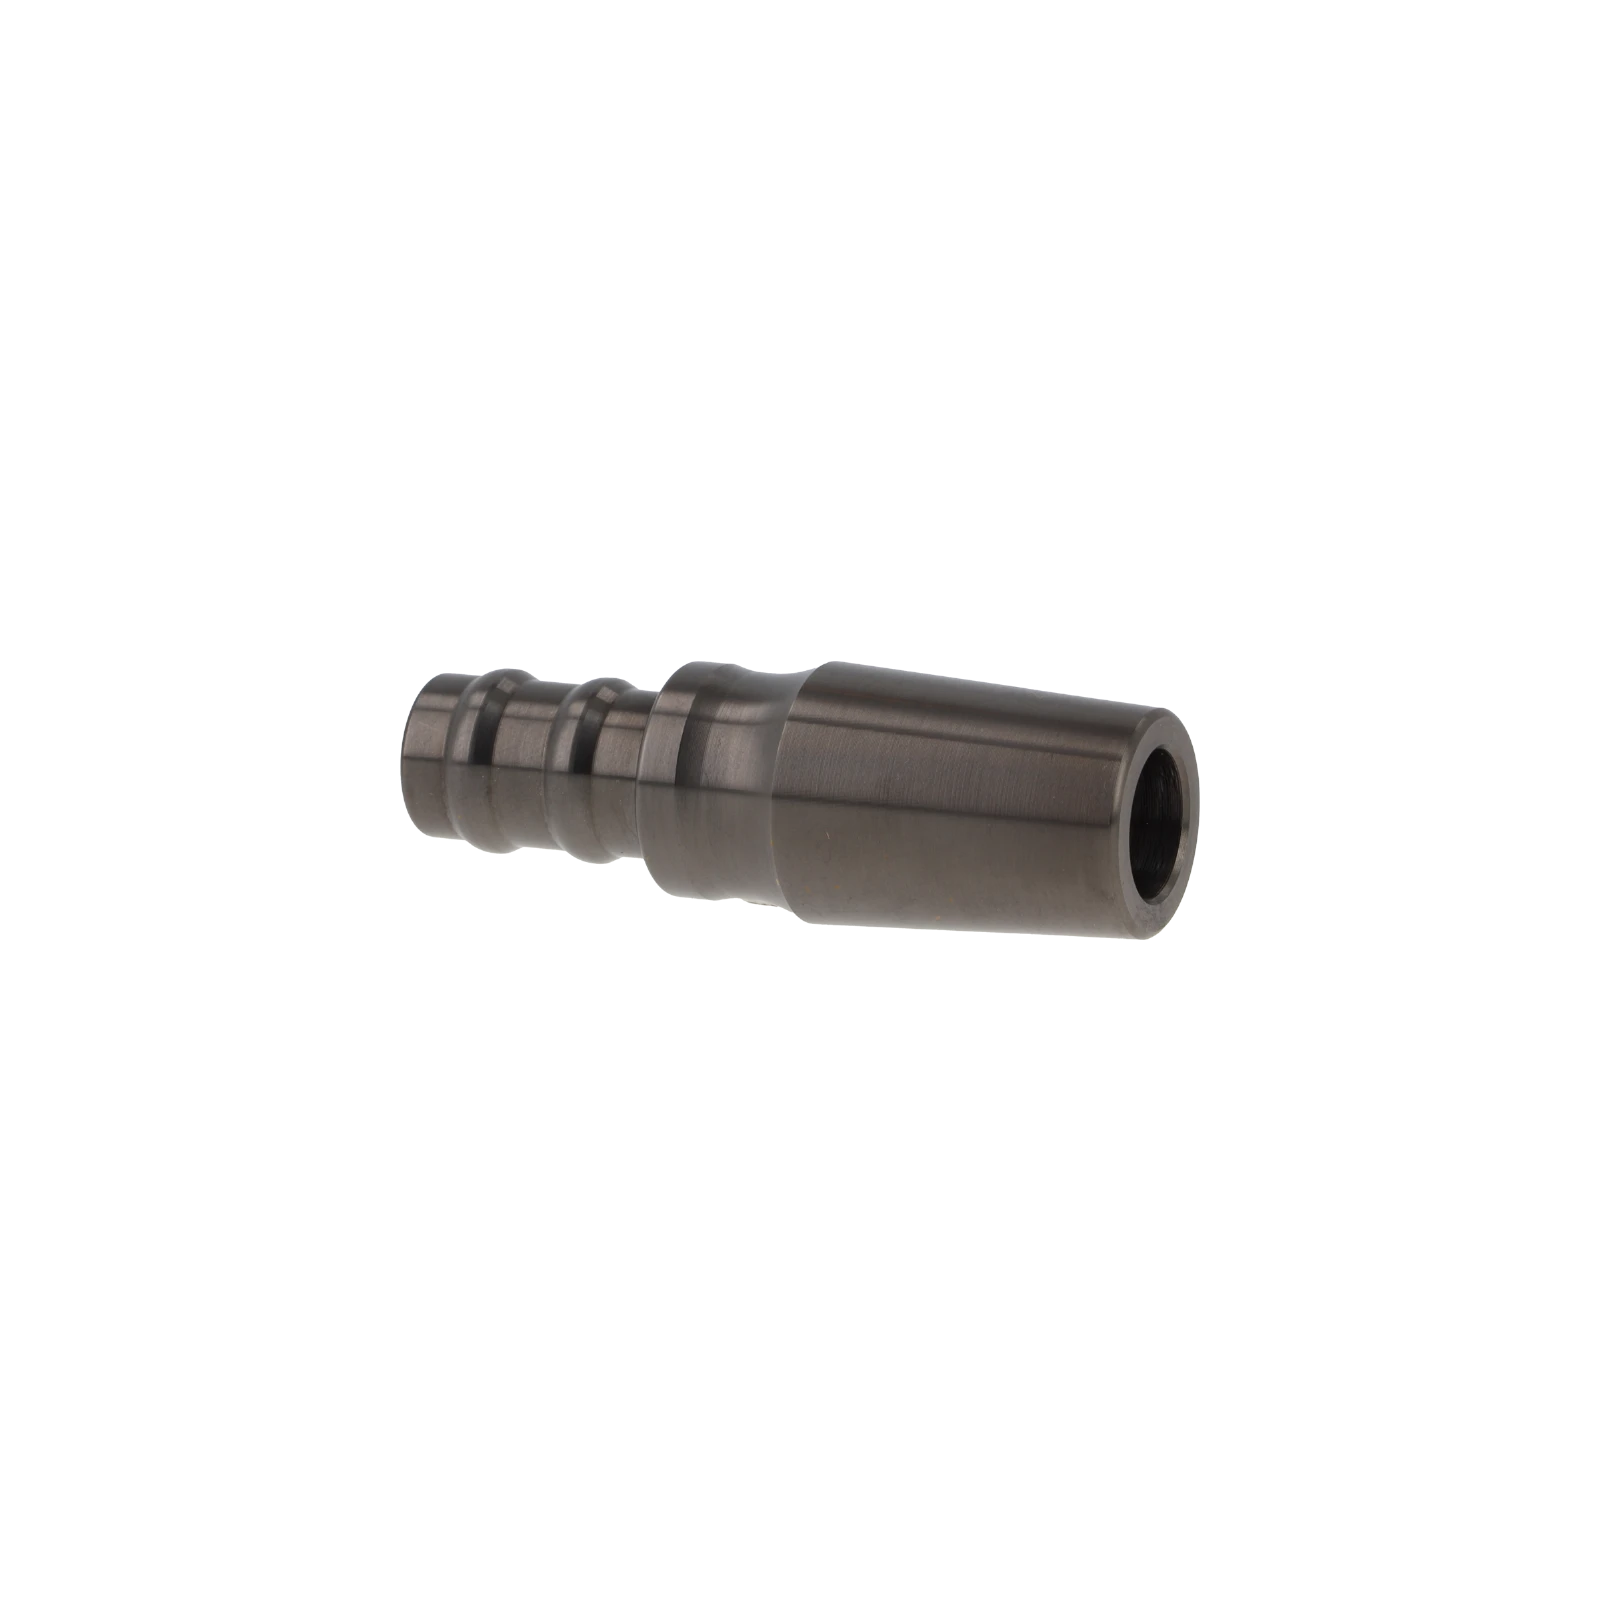 CYGN - Hose - Adapter - Nibiru - Stainless Steel - Gun - Metal - 18/8